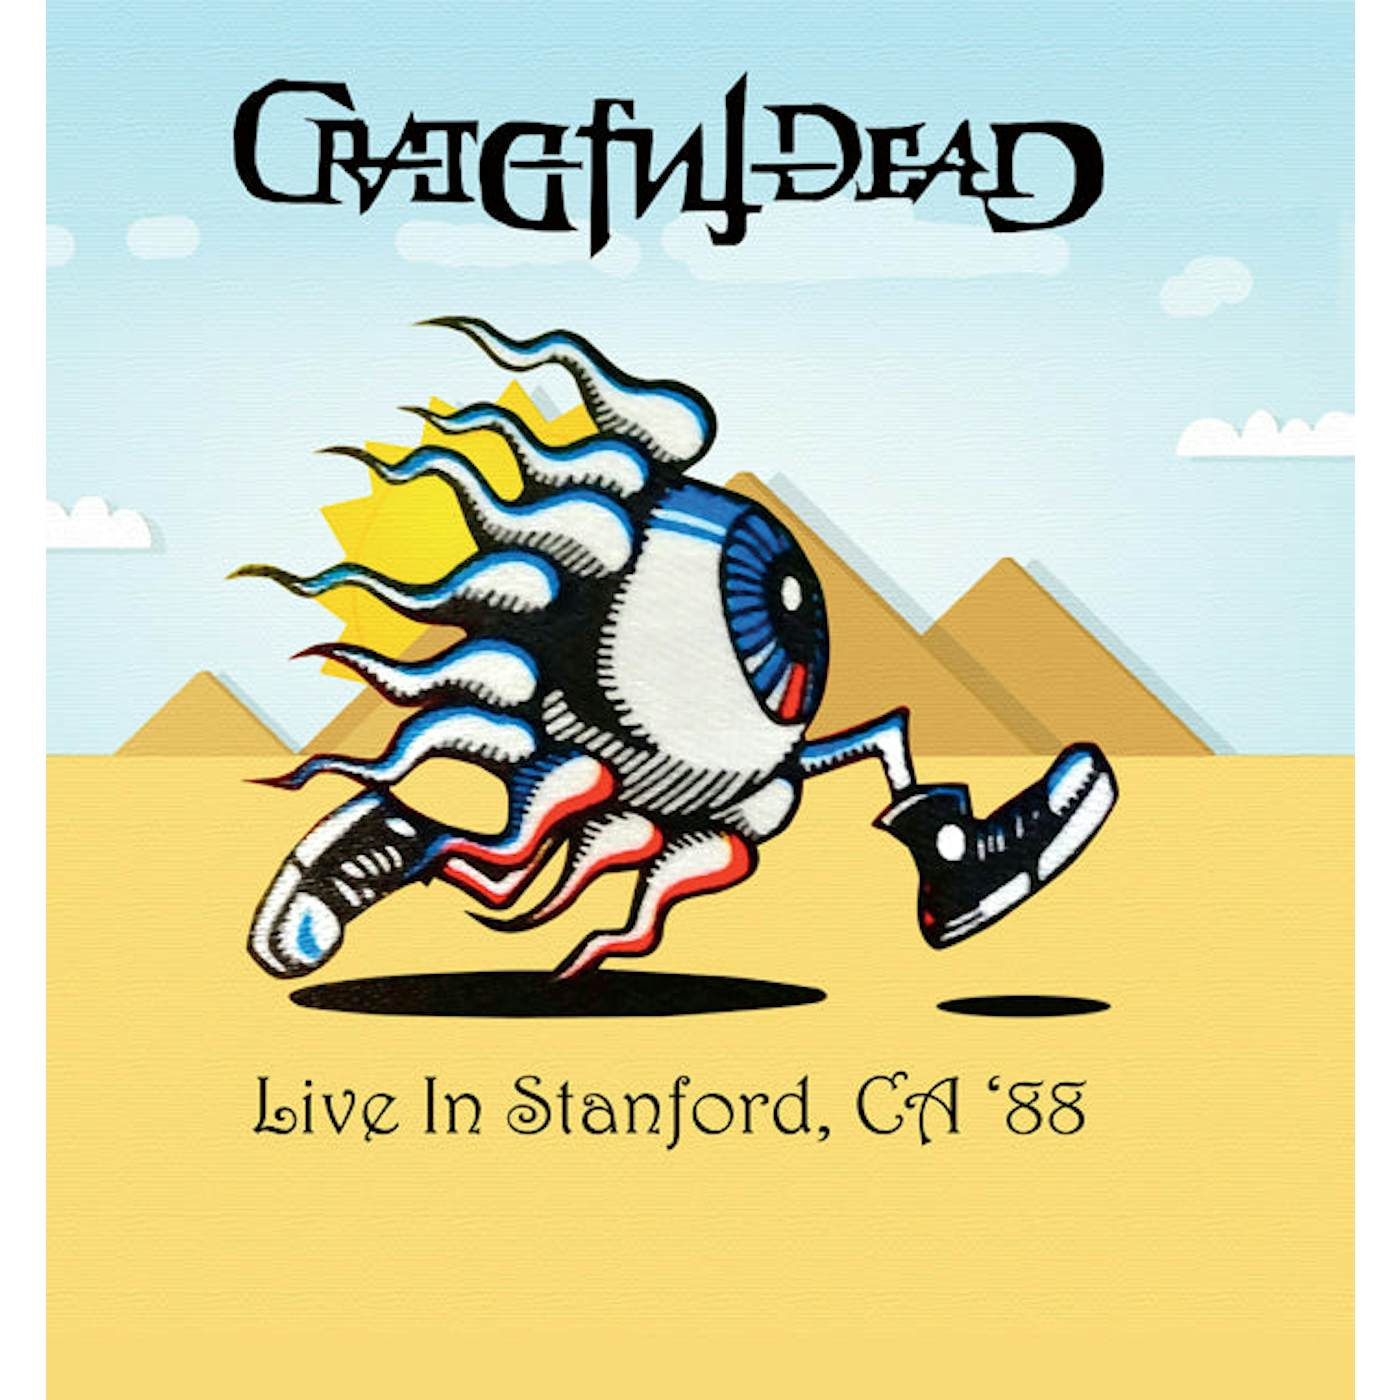 Grateful Dead LP - Live In Sanford, Ca '88 [80G Eco Mixed Triple Vinyl]